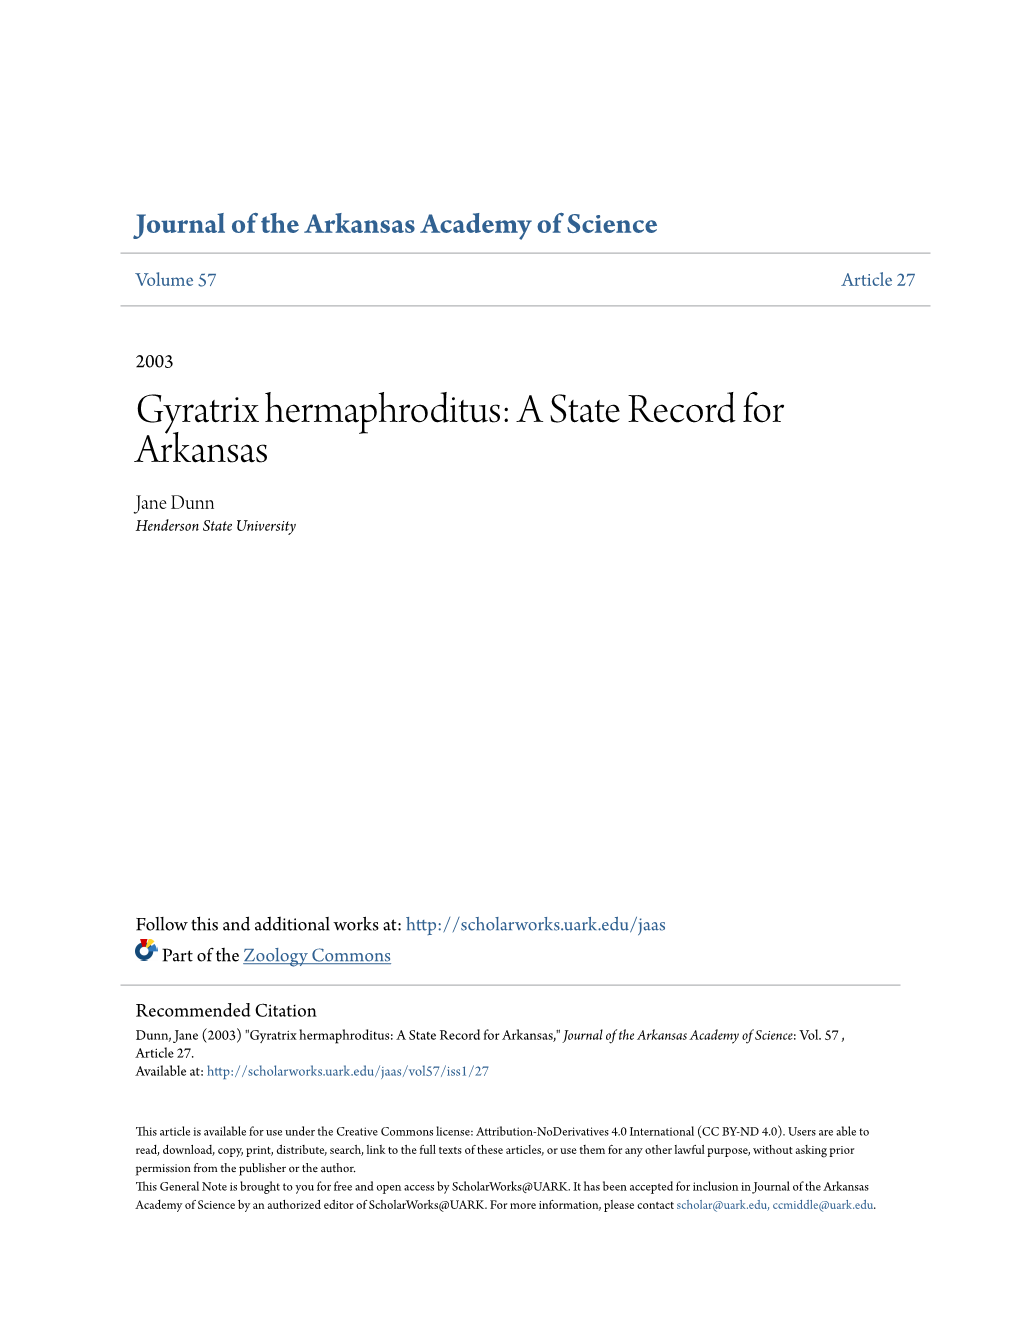 Gyratrix Hermaphroditus: a State Record for Arkansas Jane Dunn Henderson State University